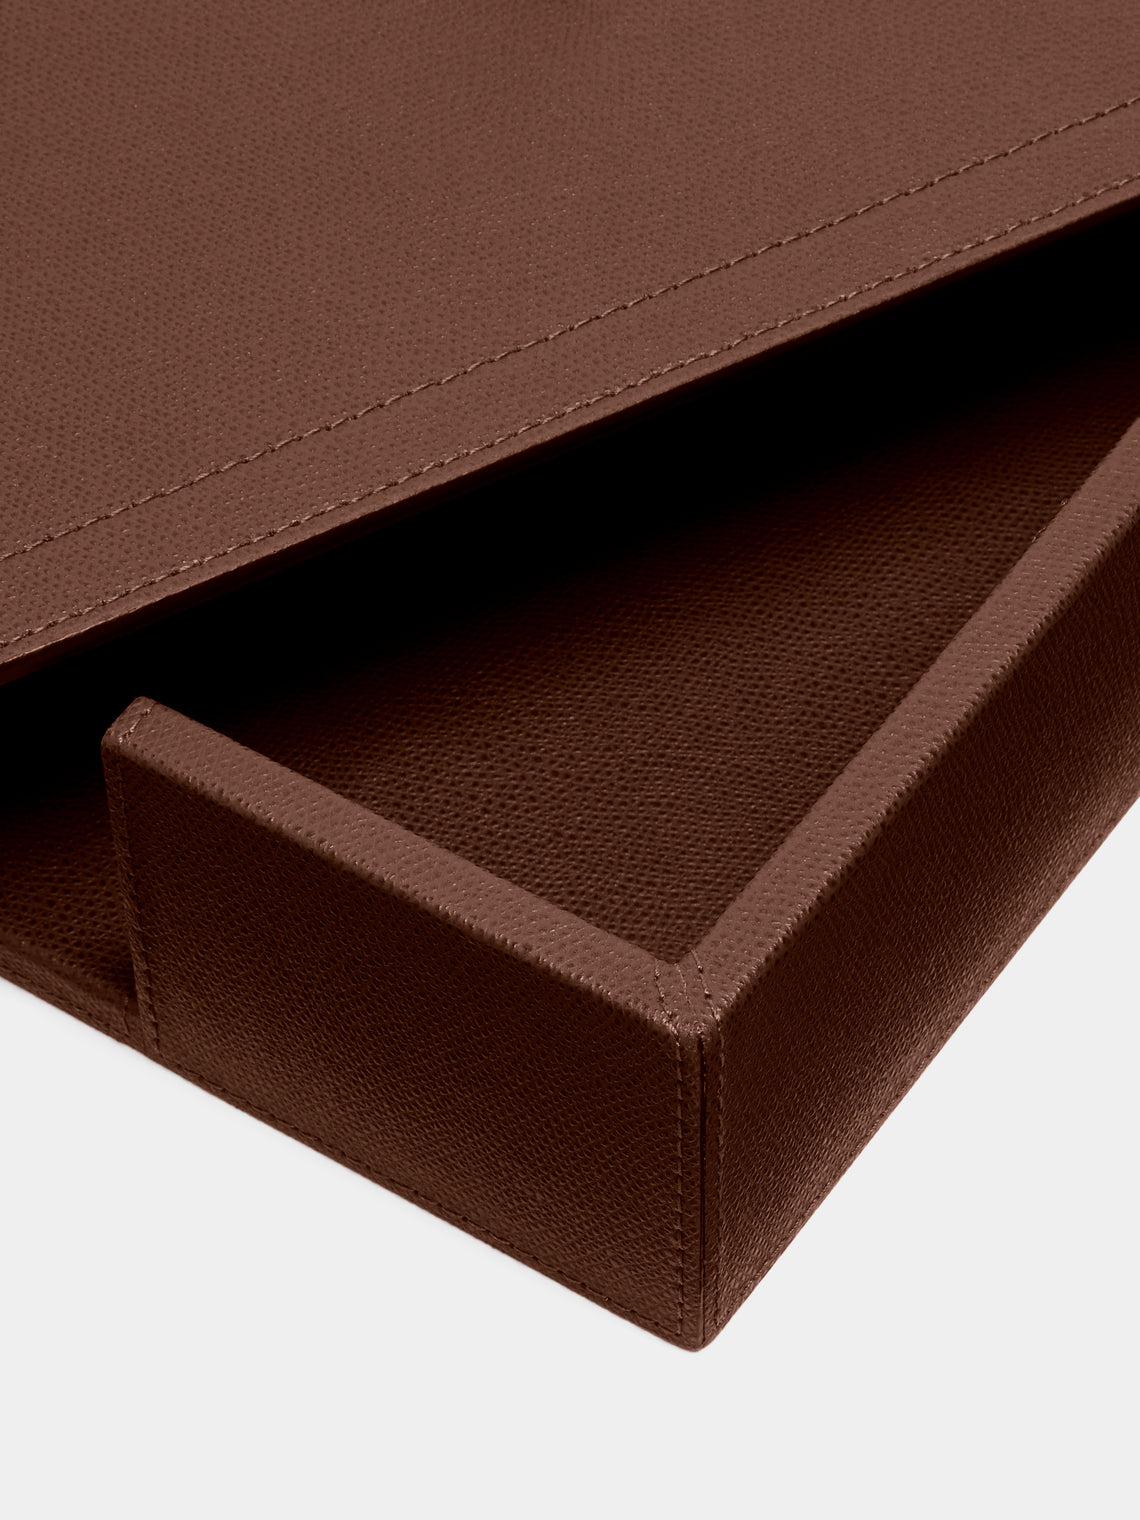 Giobagnara - Leopold Leather Document Holder -  - ABASK